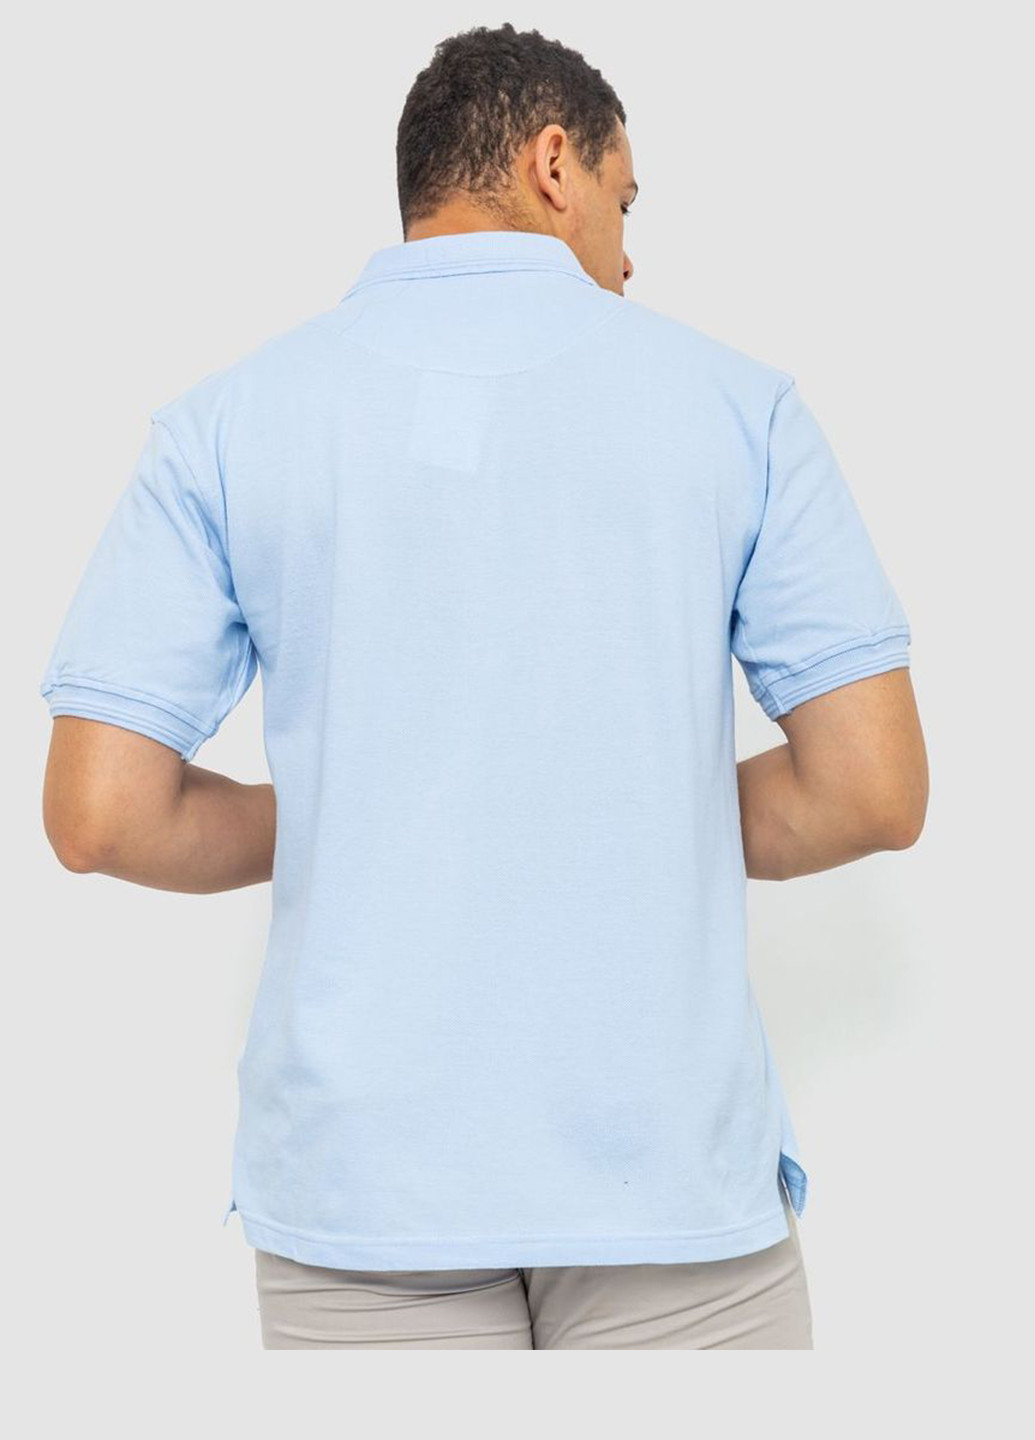 Голубой футболка-поло для мужчин Ager однотонная